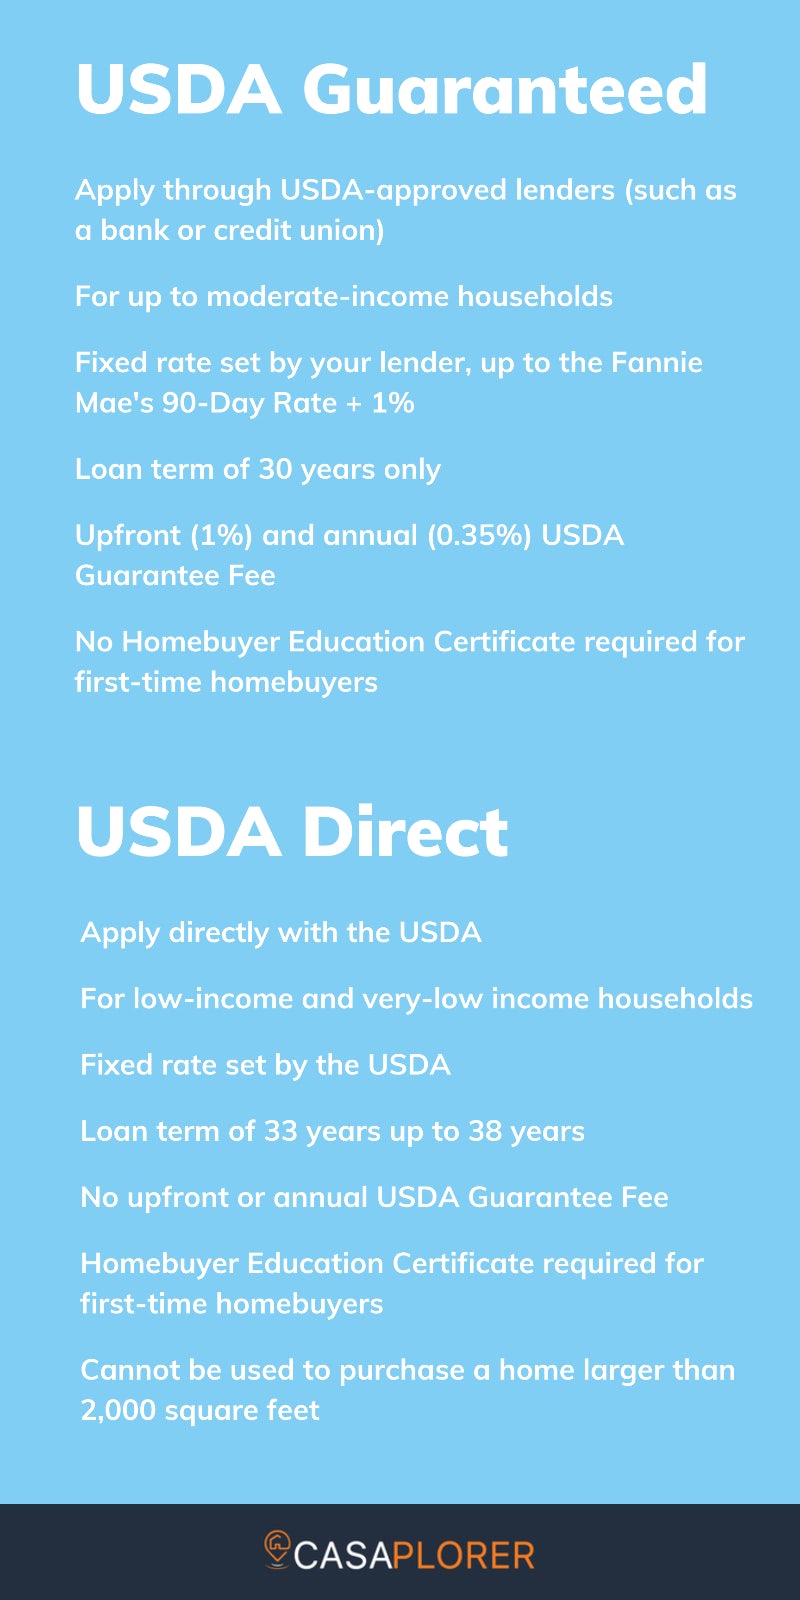 USDA Direct Loan Limits